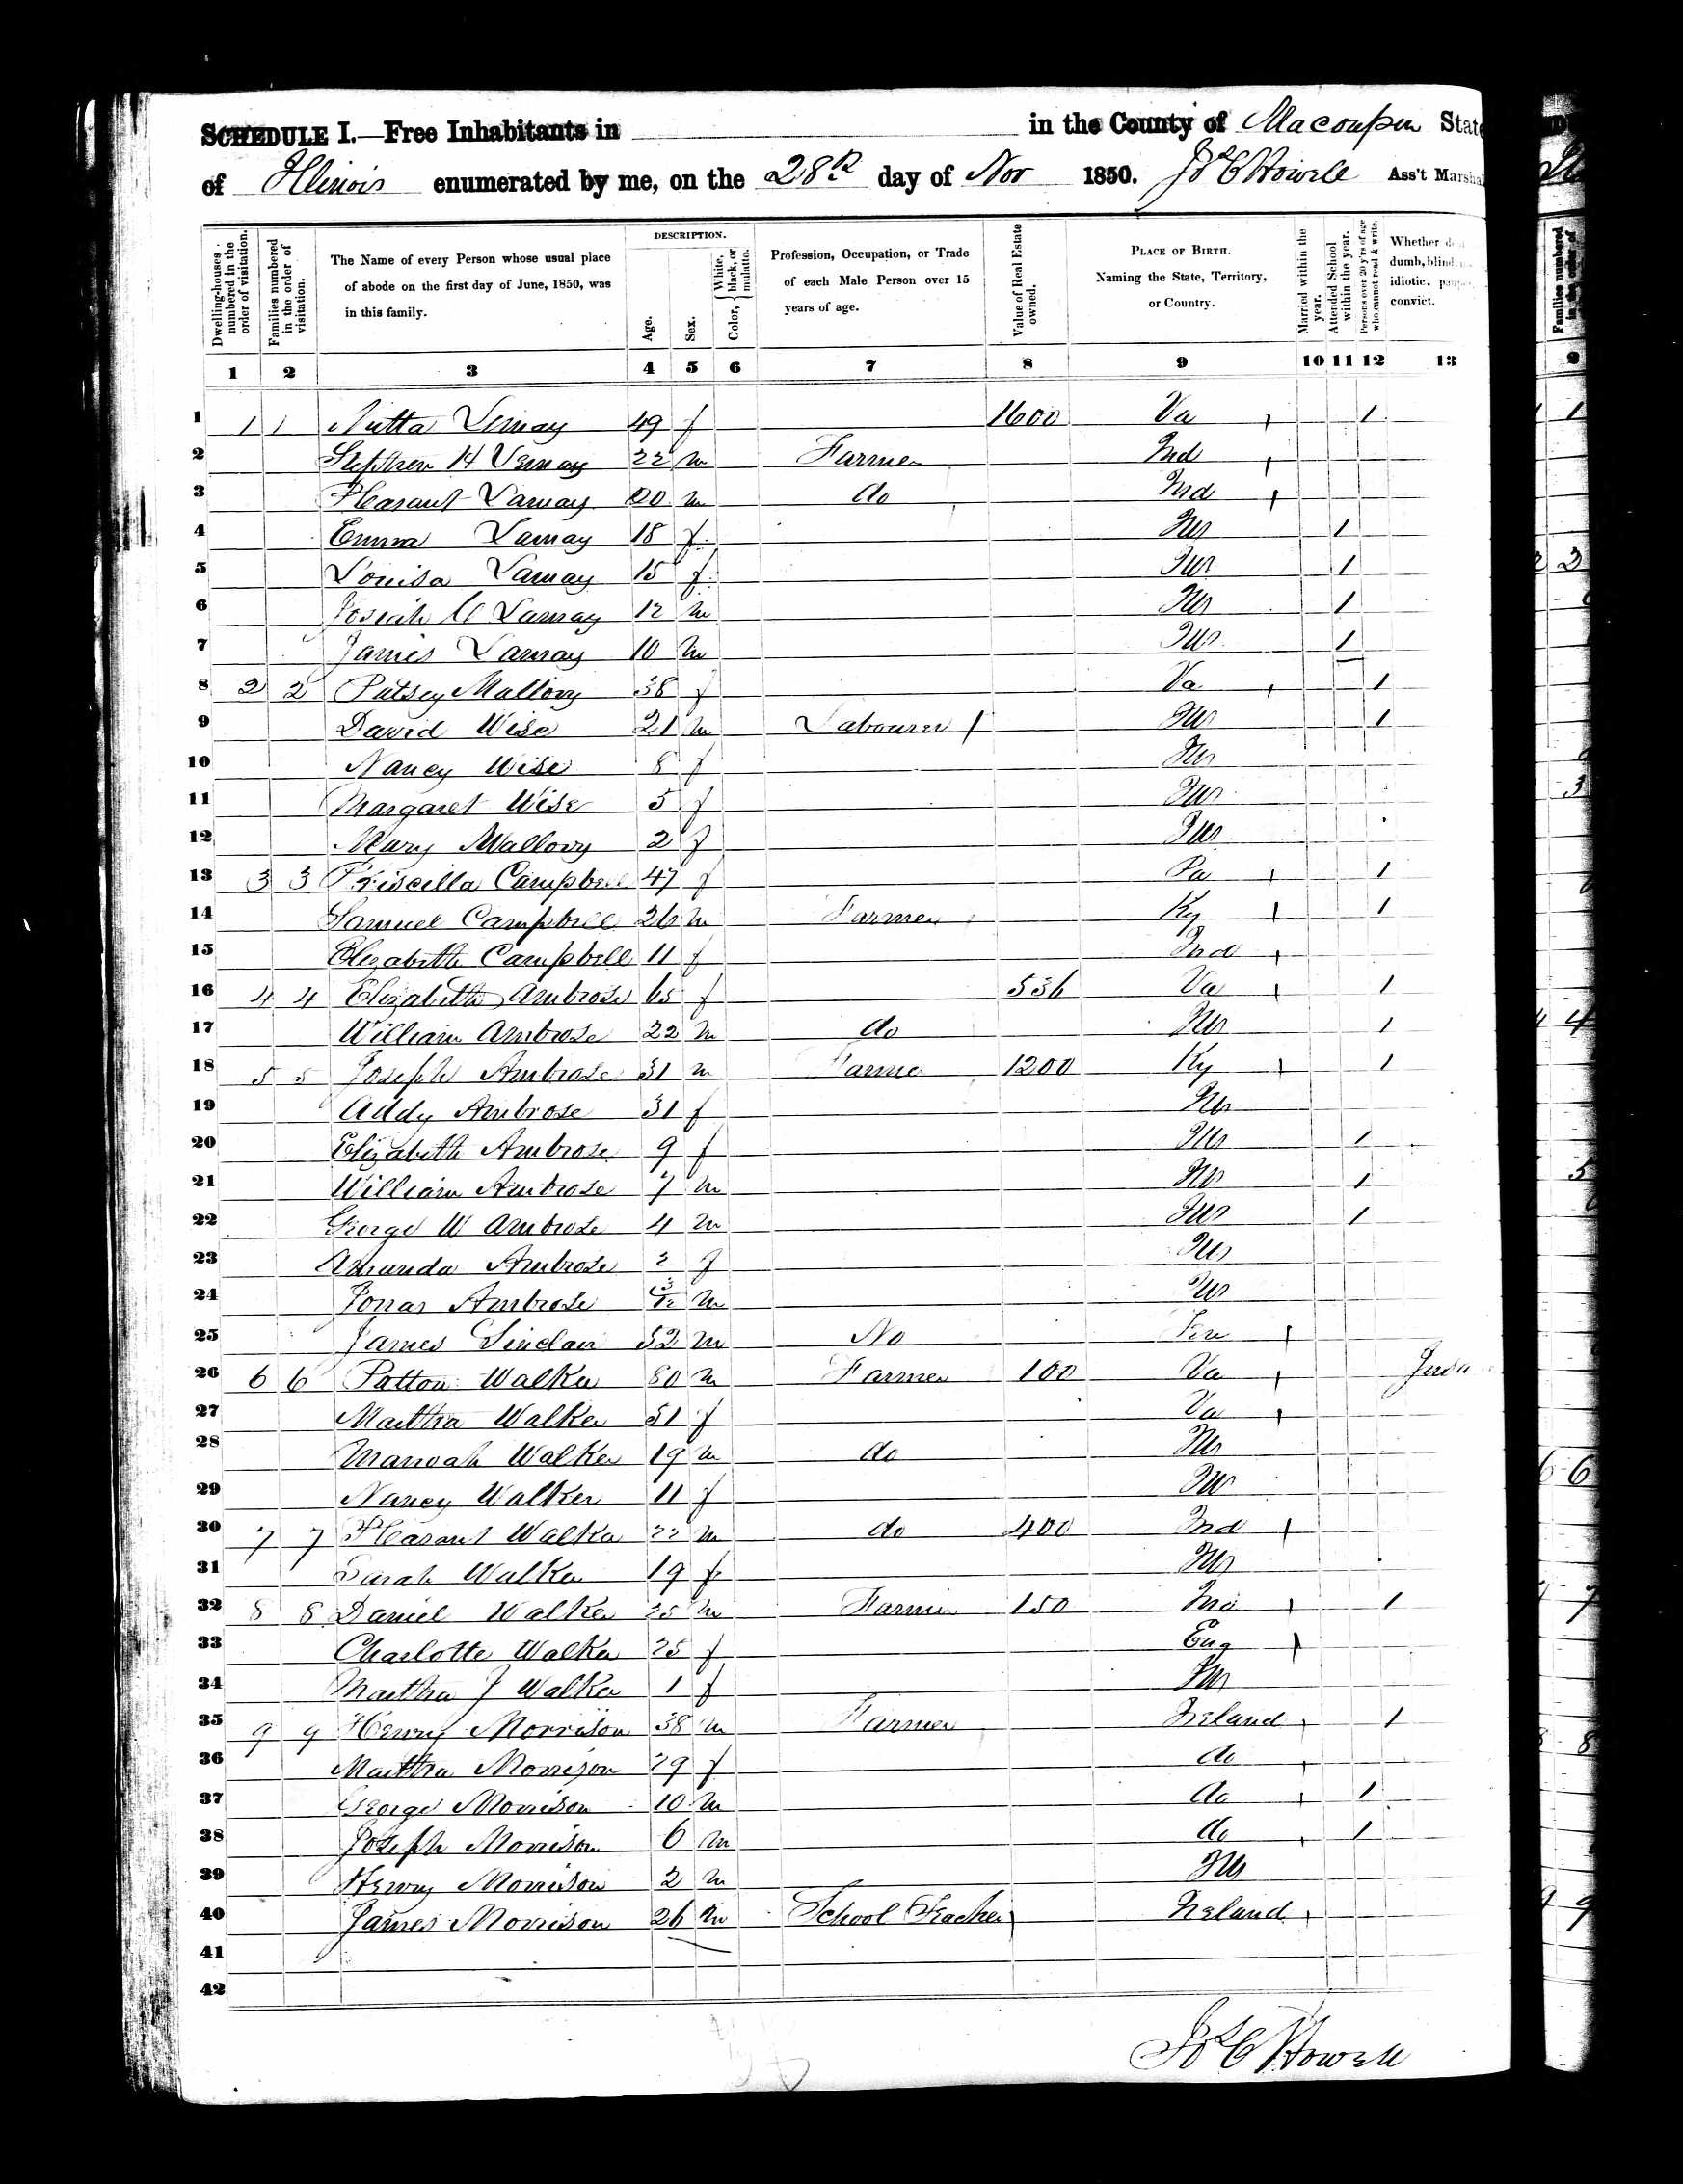 Patton/Peyton Walker, 1850 Macoupin County, Illinois, census